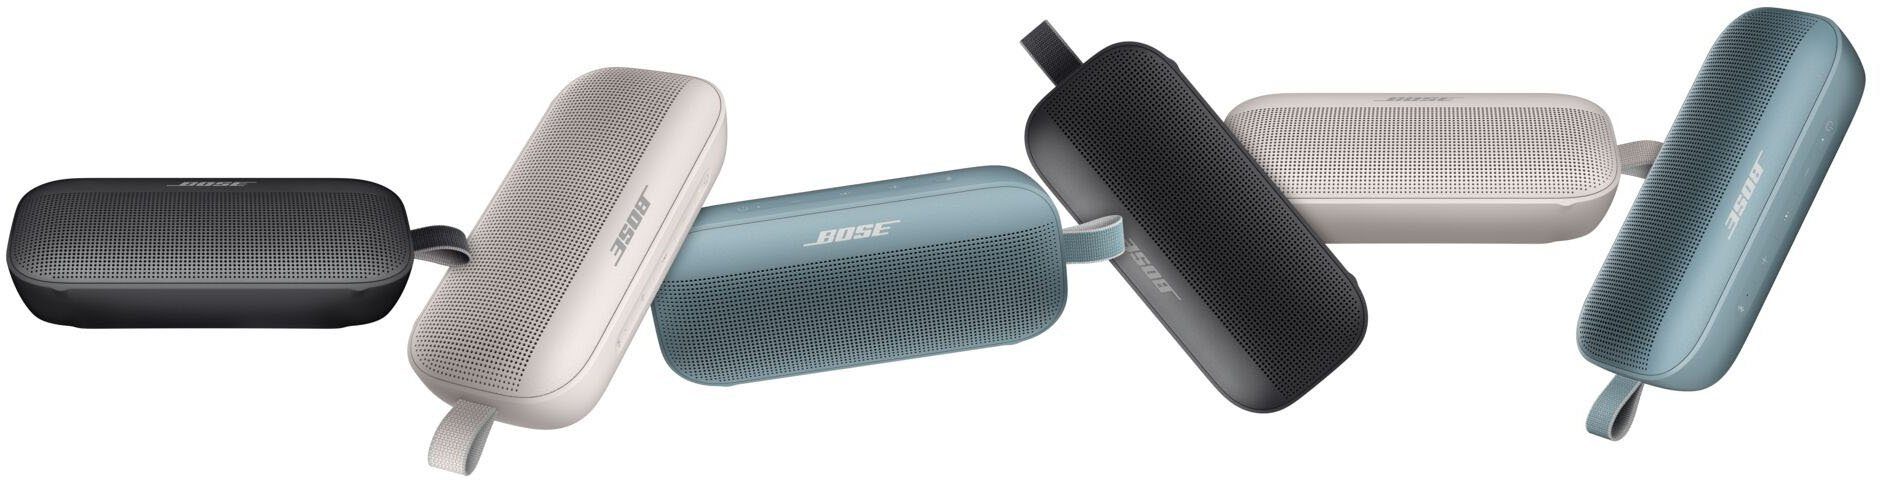 Flex Stereo Bose Lautsprecher SoundLink blau (Bluetooth)